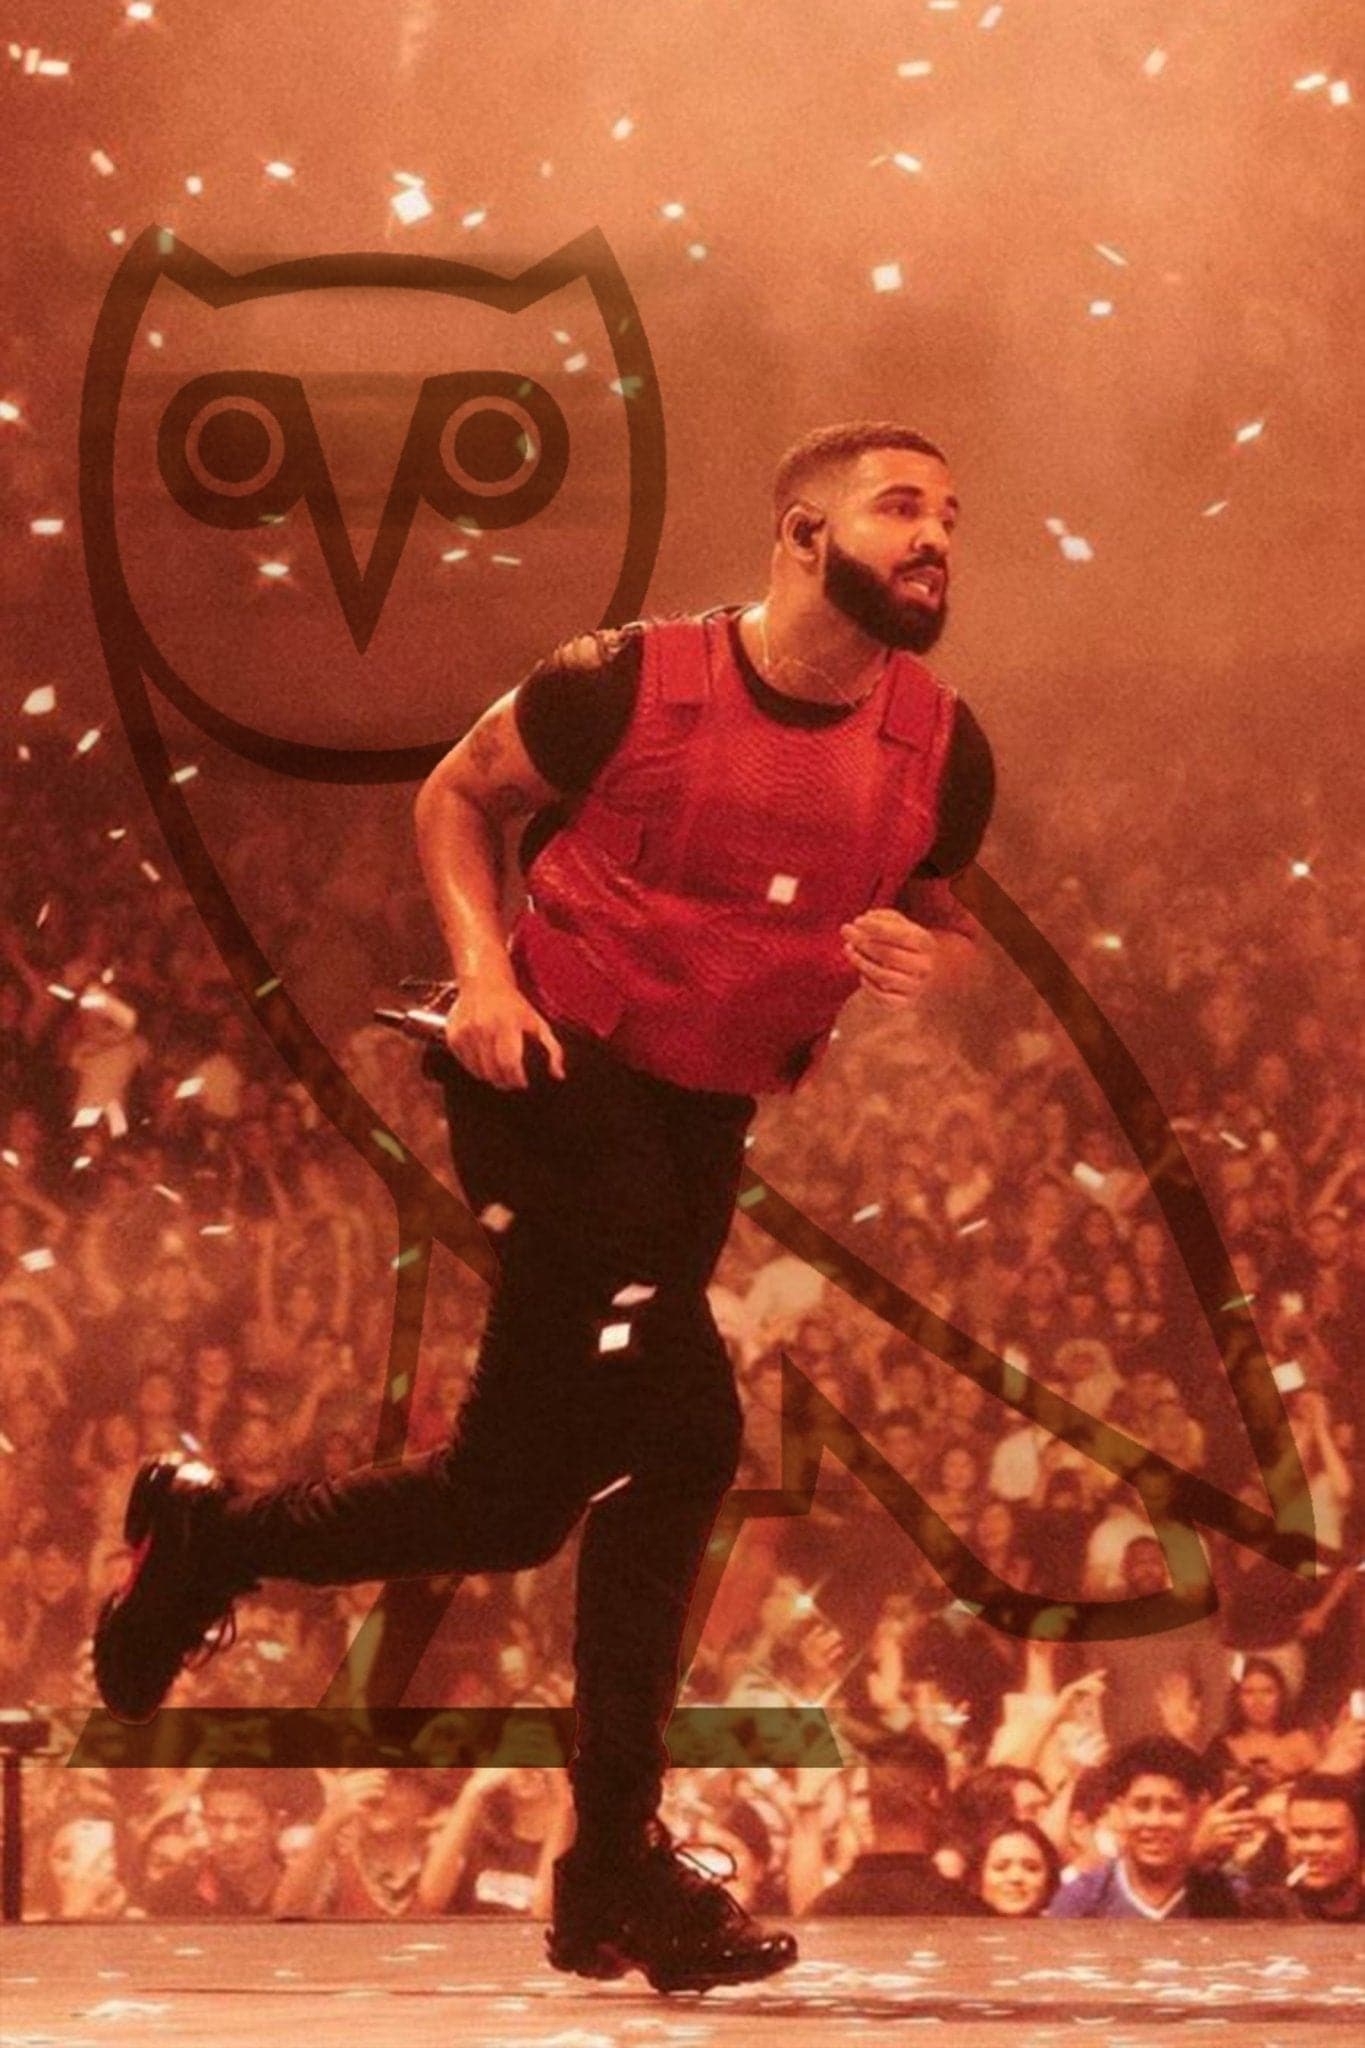 Drake 'OvO Vest' Poster - Posters Plug